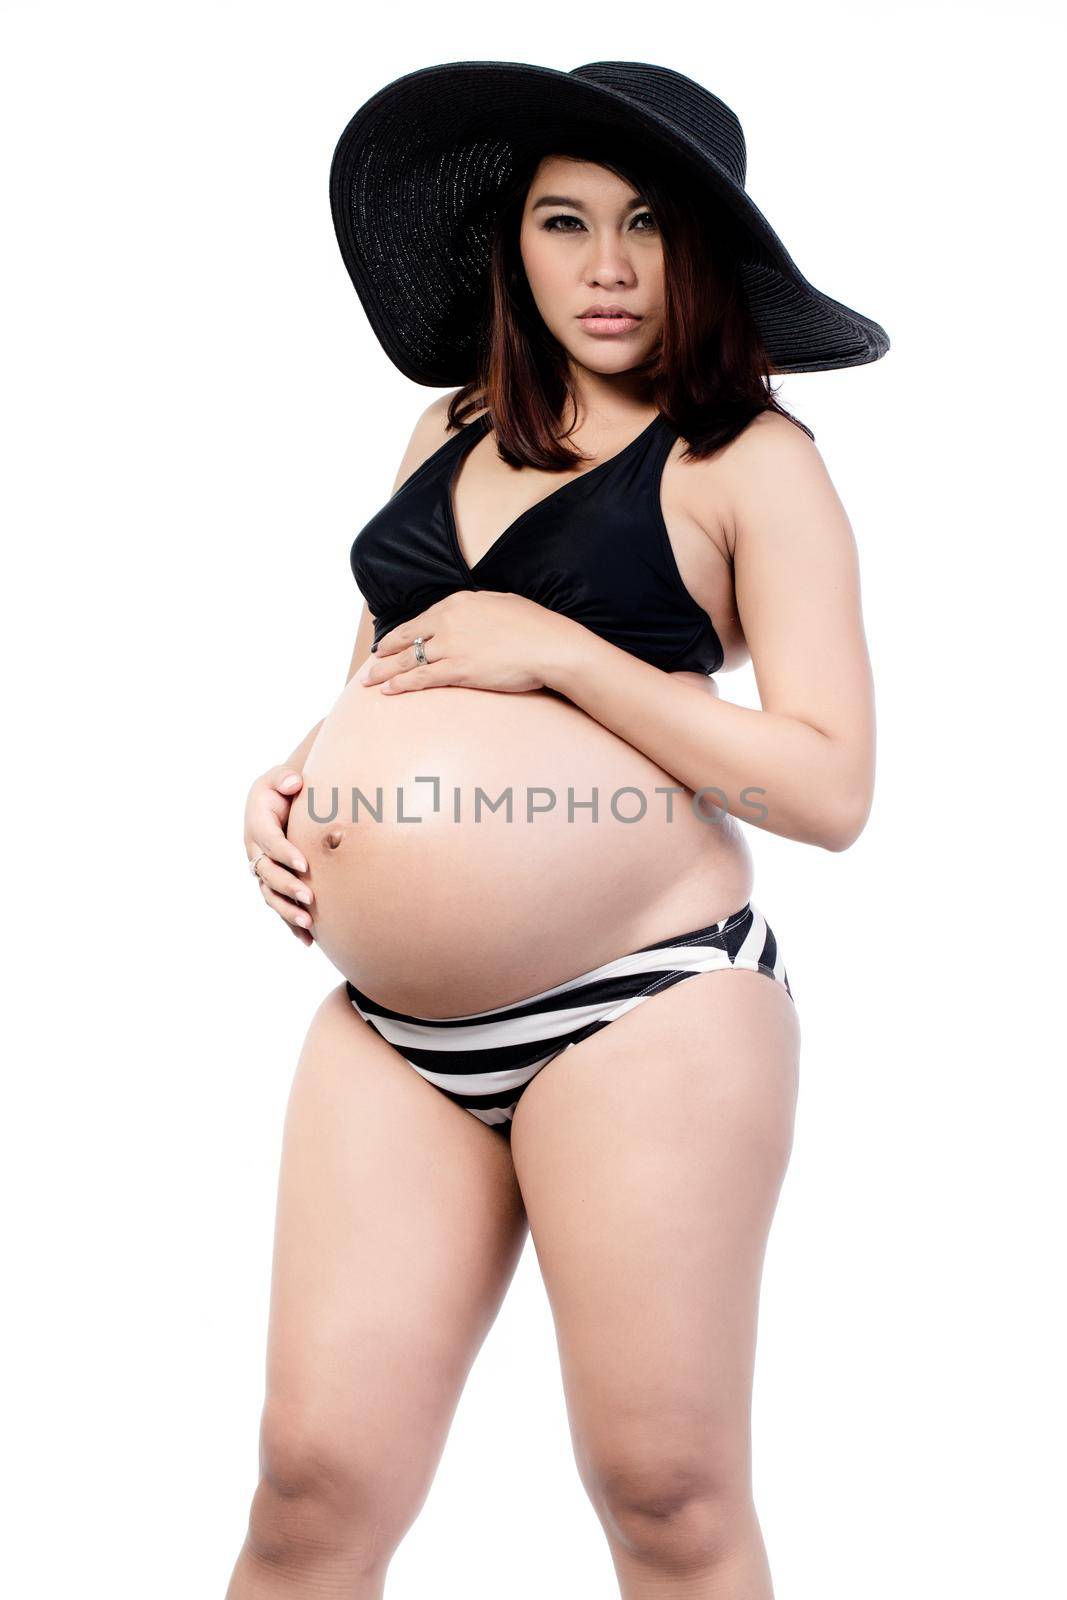 Pregnant woman in black bikini by Kzenon